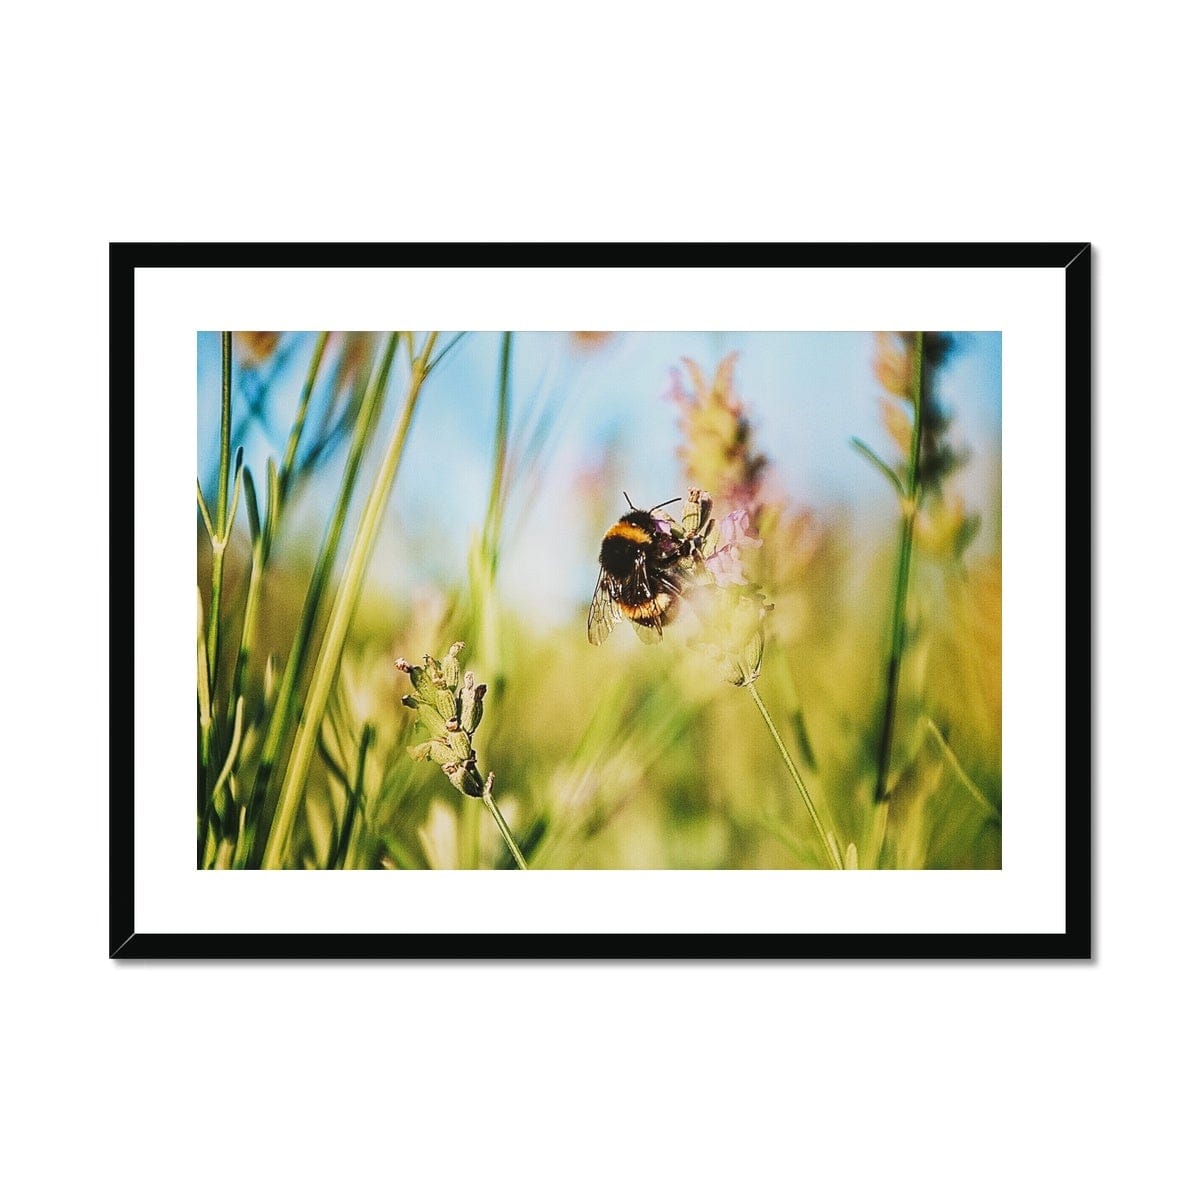 Adam Davies Framed A4 Landscape (29x21cm) / Black Frame Bumble Bee Framed & Mounted Print